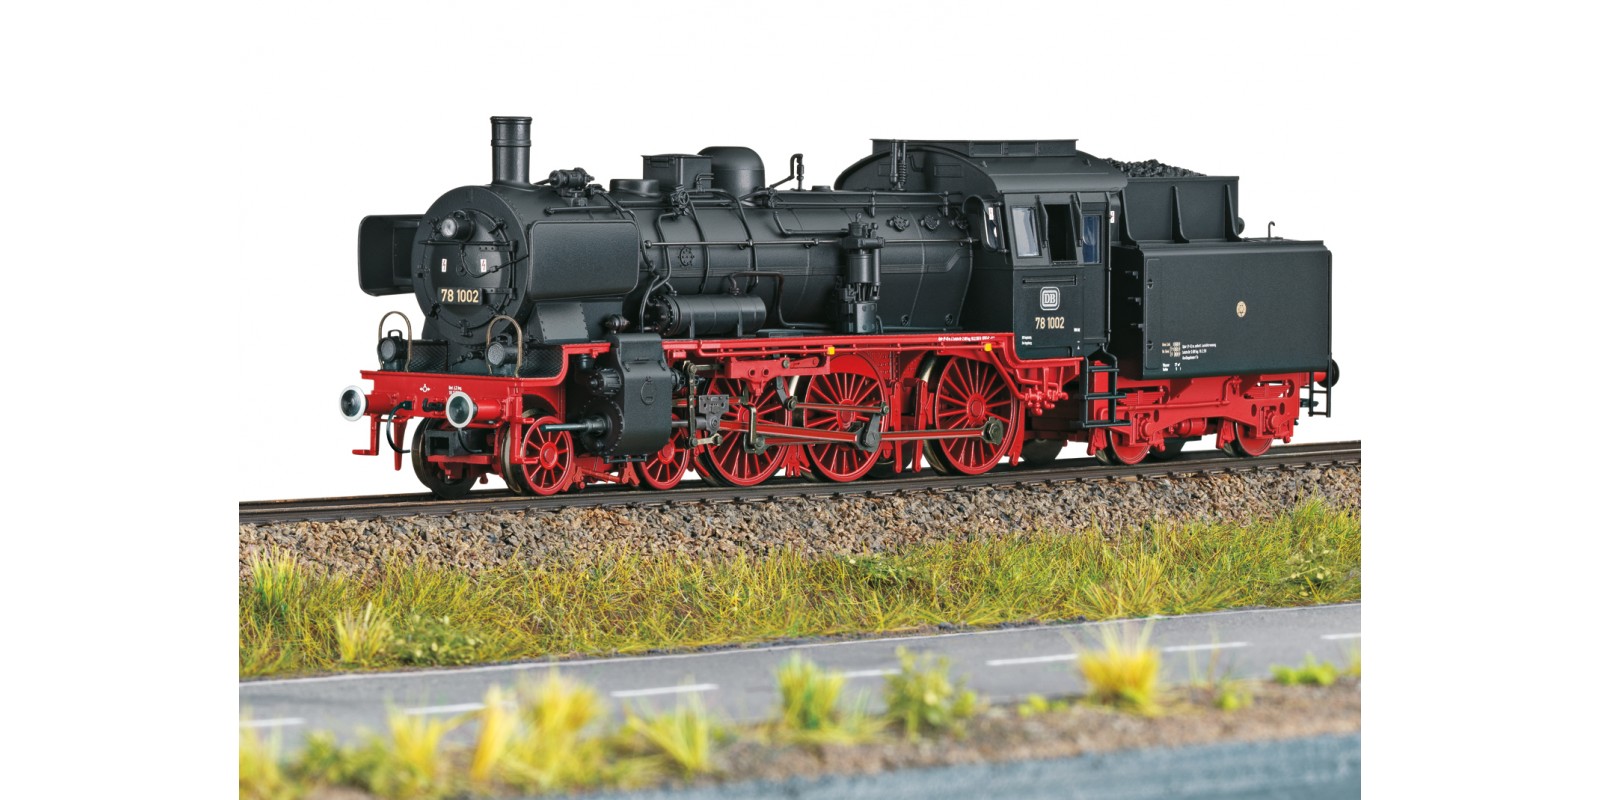 T22892 DB Steam, Road No. 78 1002